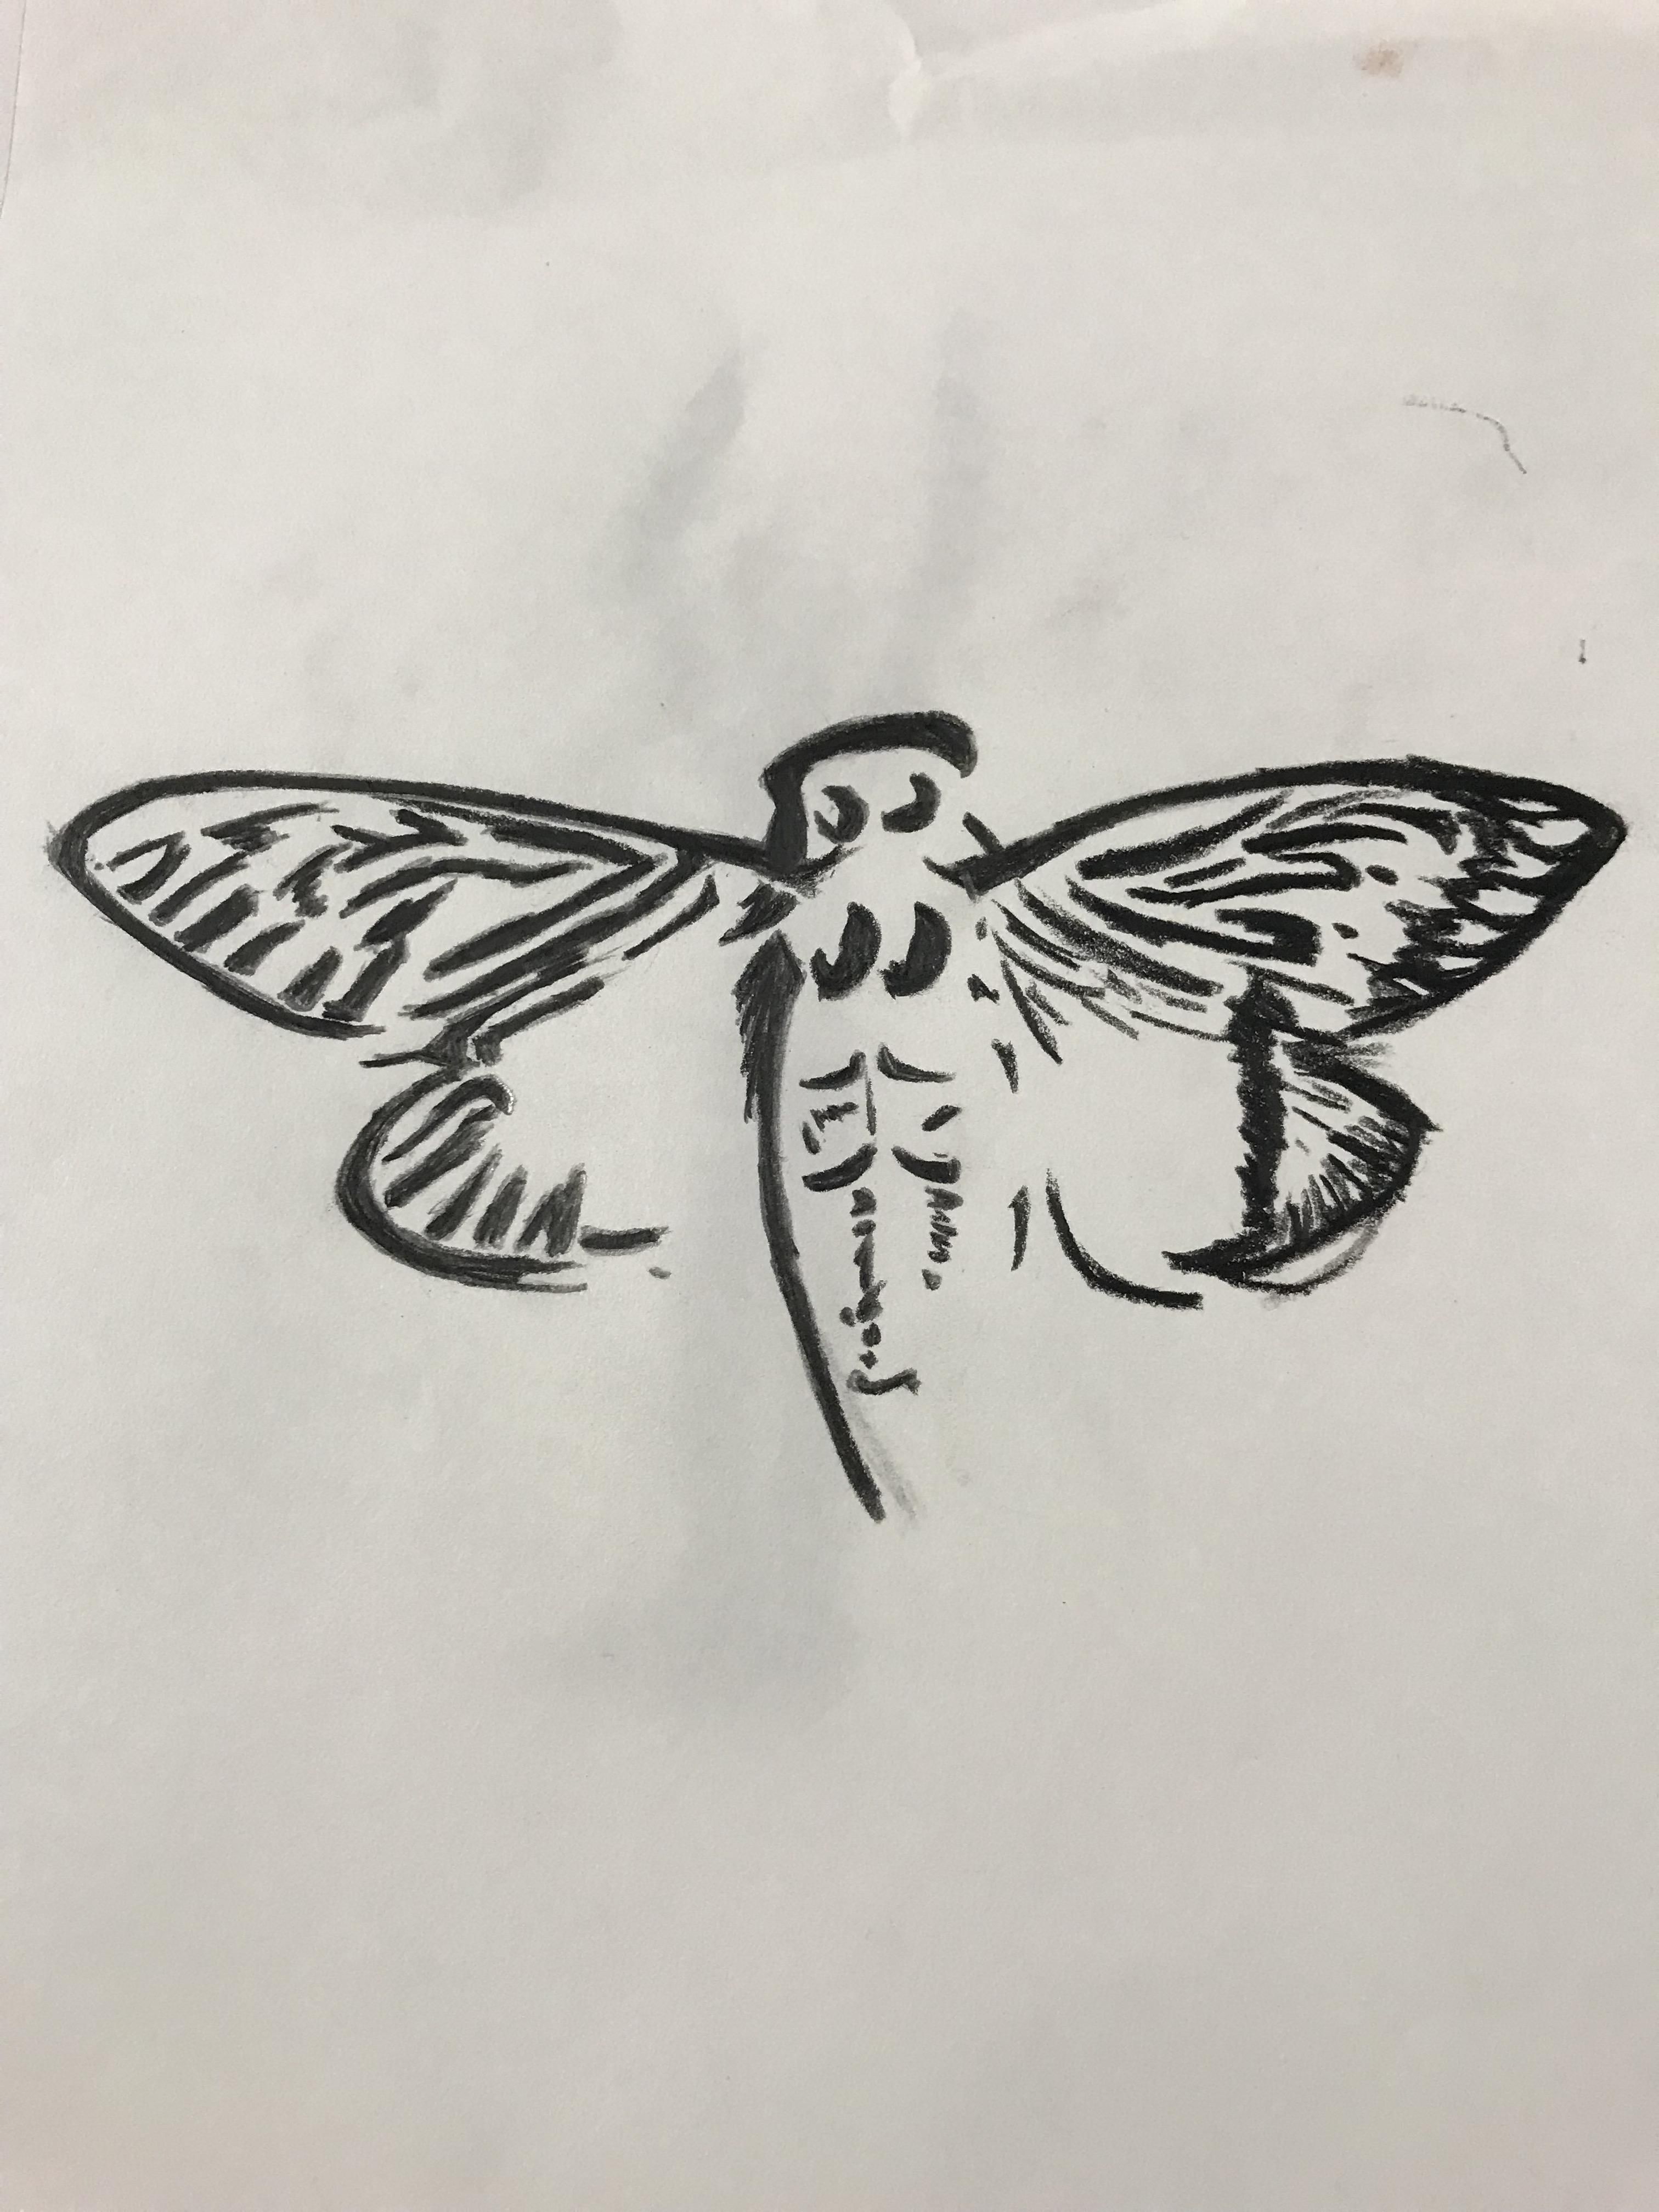 Cicada 3301. Cicada tattoo, Psychedelic illustration, Art